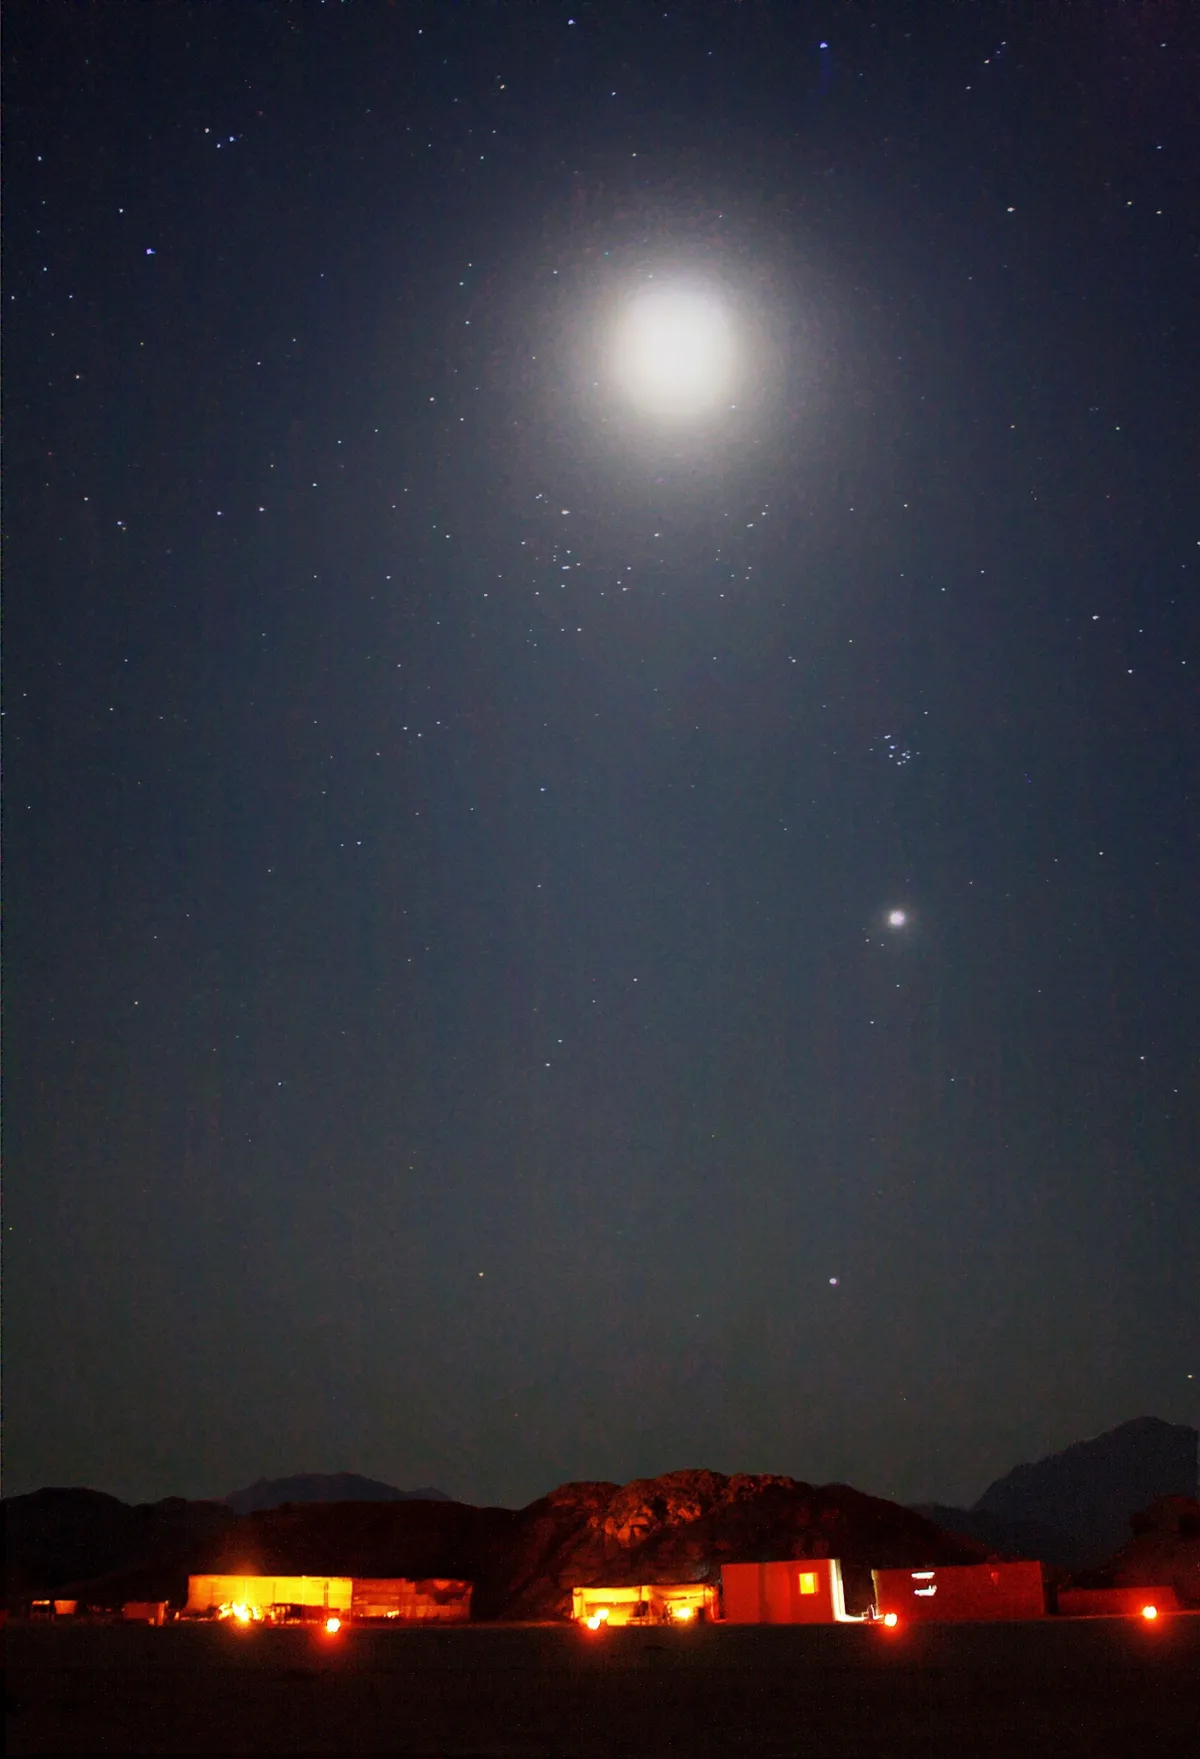 Bedouin Camp by Night by Ryan Radford, Sinai Desert. Equipment: Canon 1000D, Kit lens, tripod.